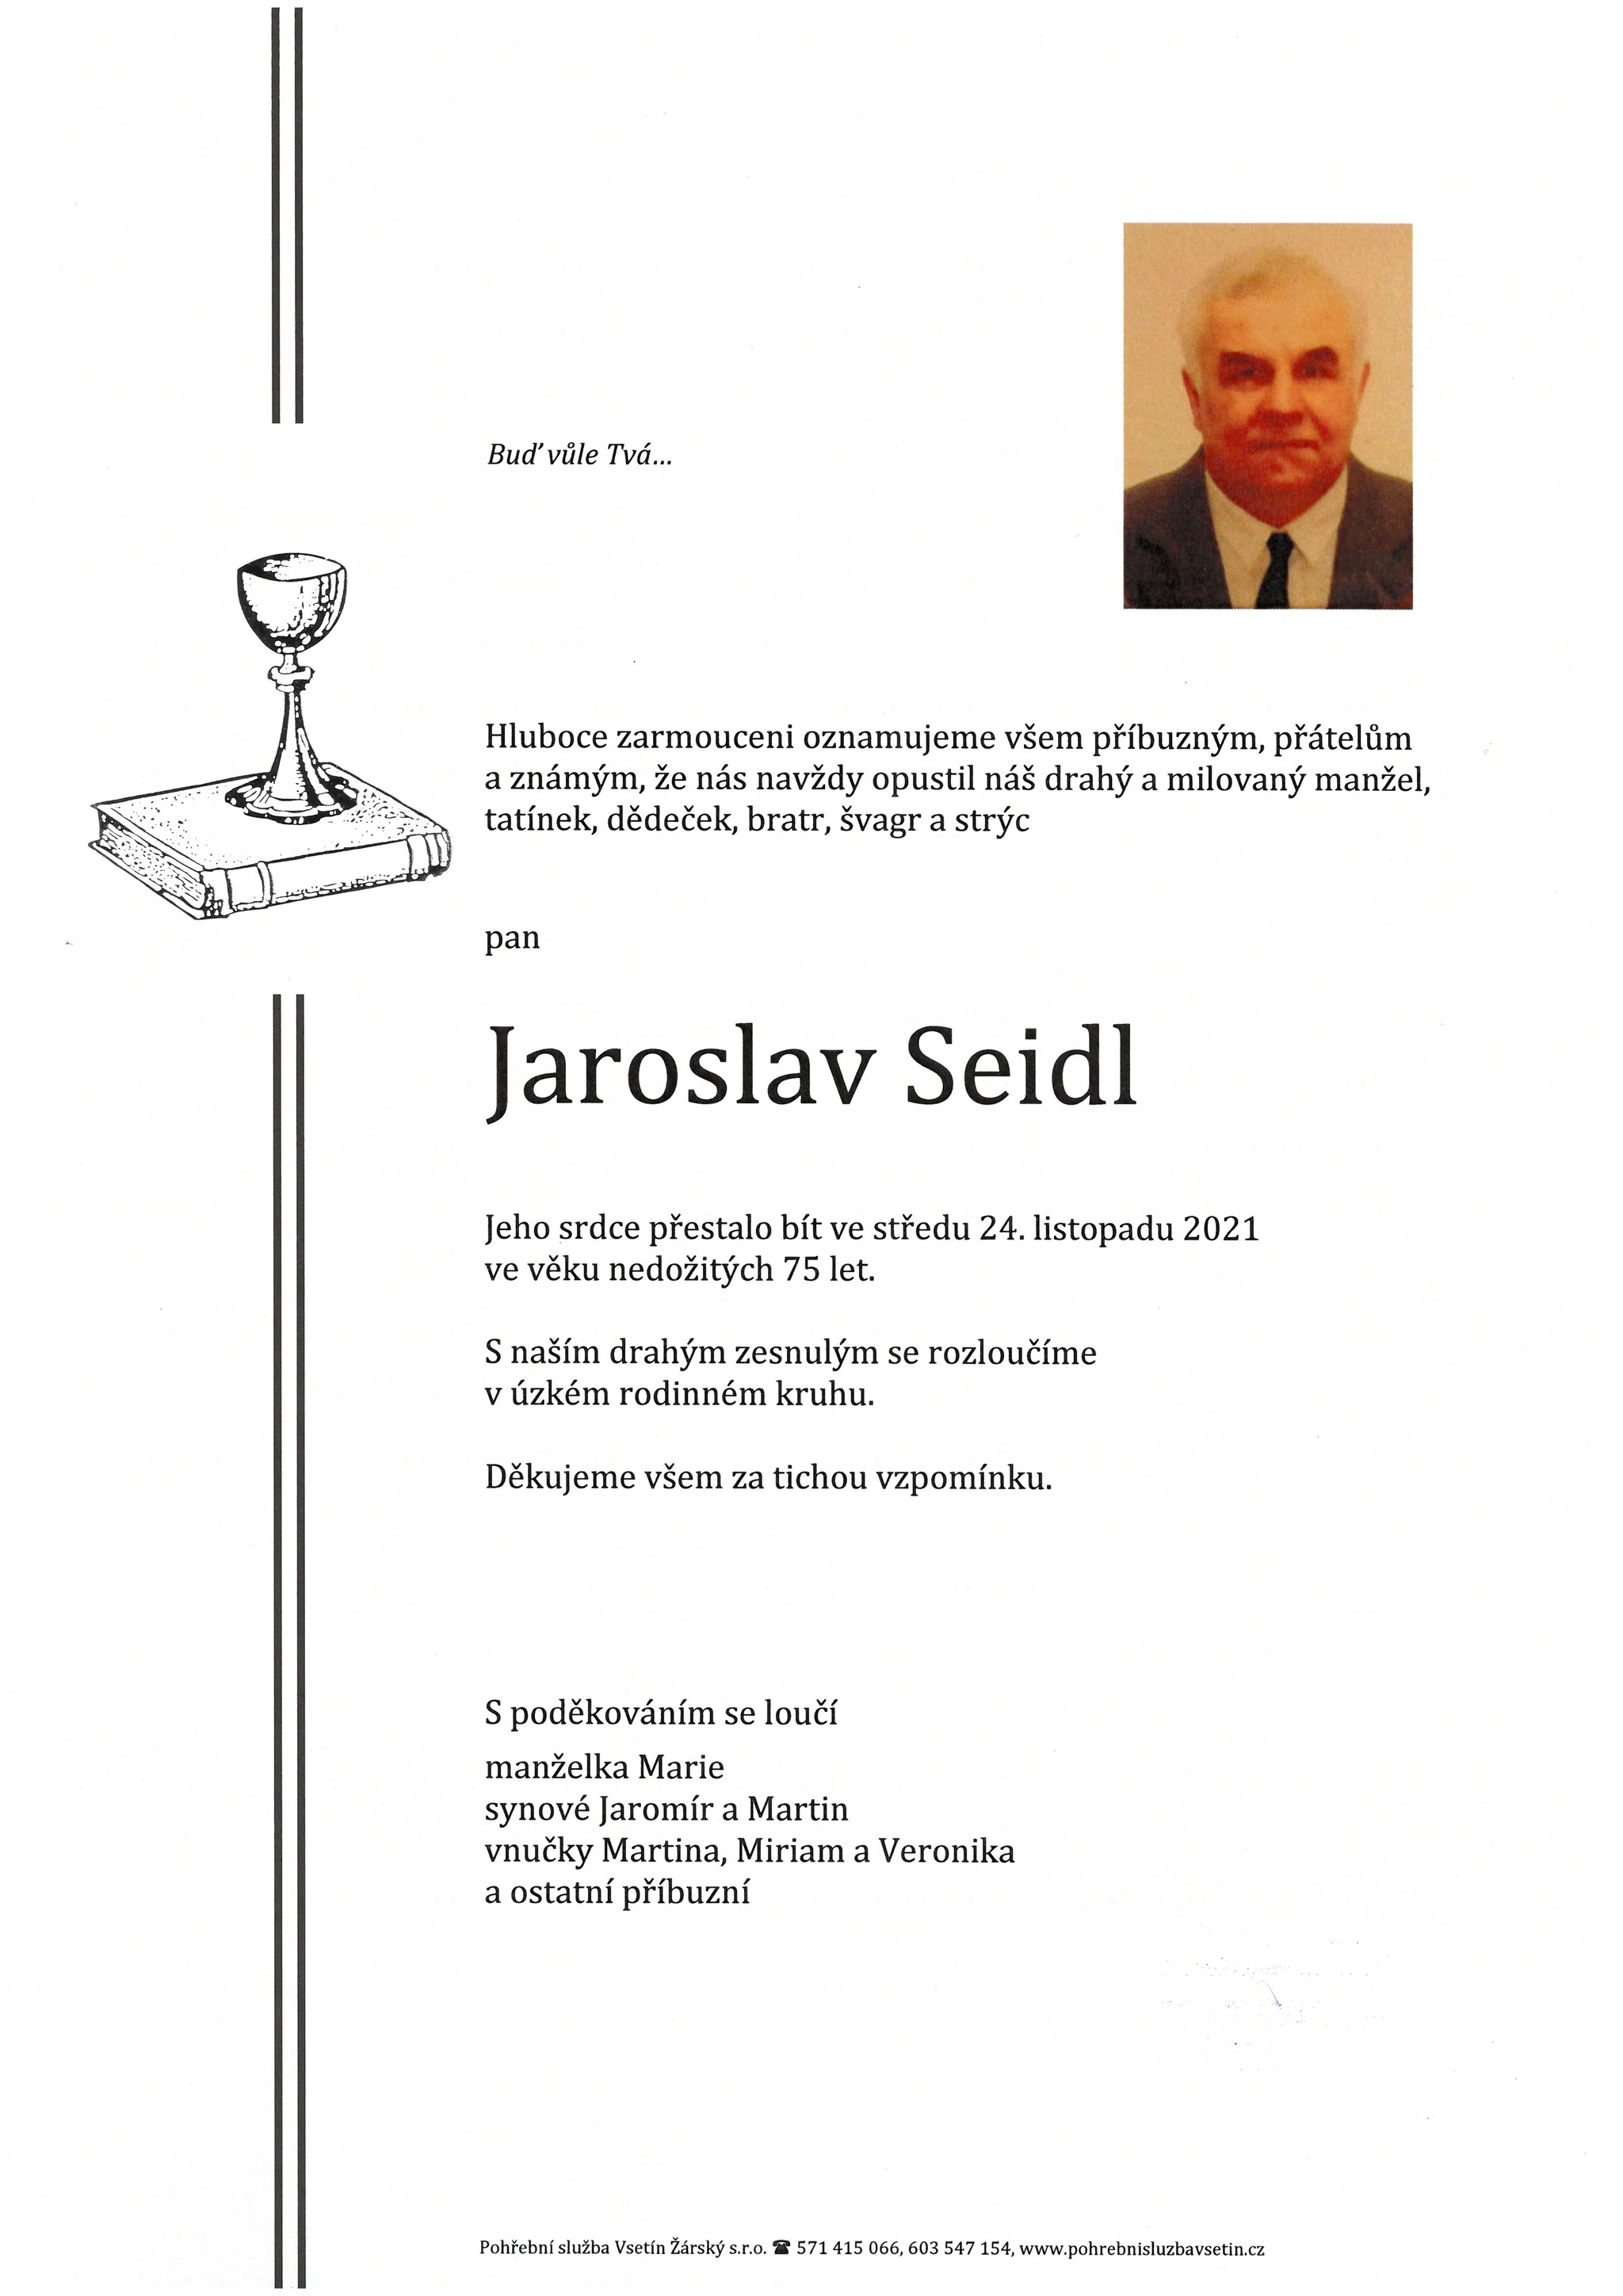 Jaroslav Seidl